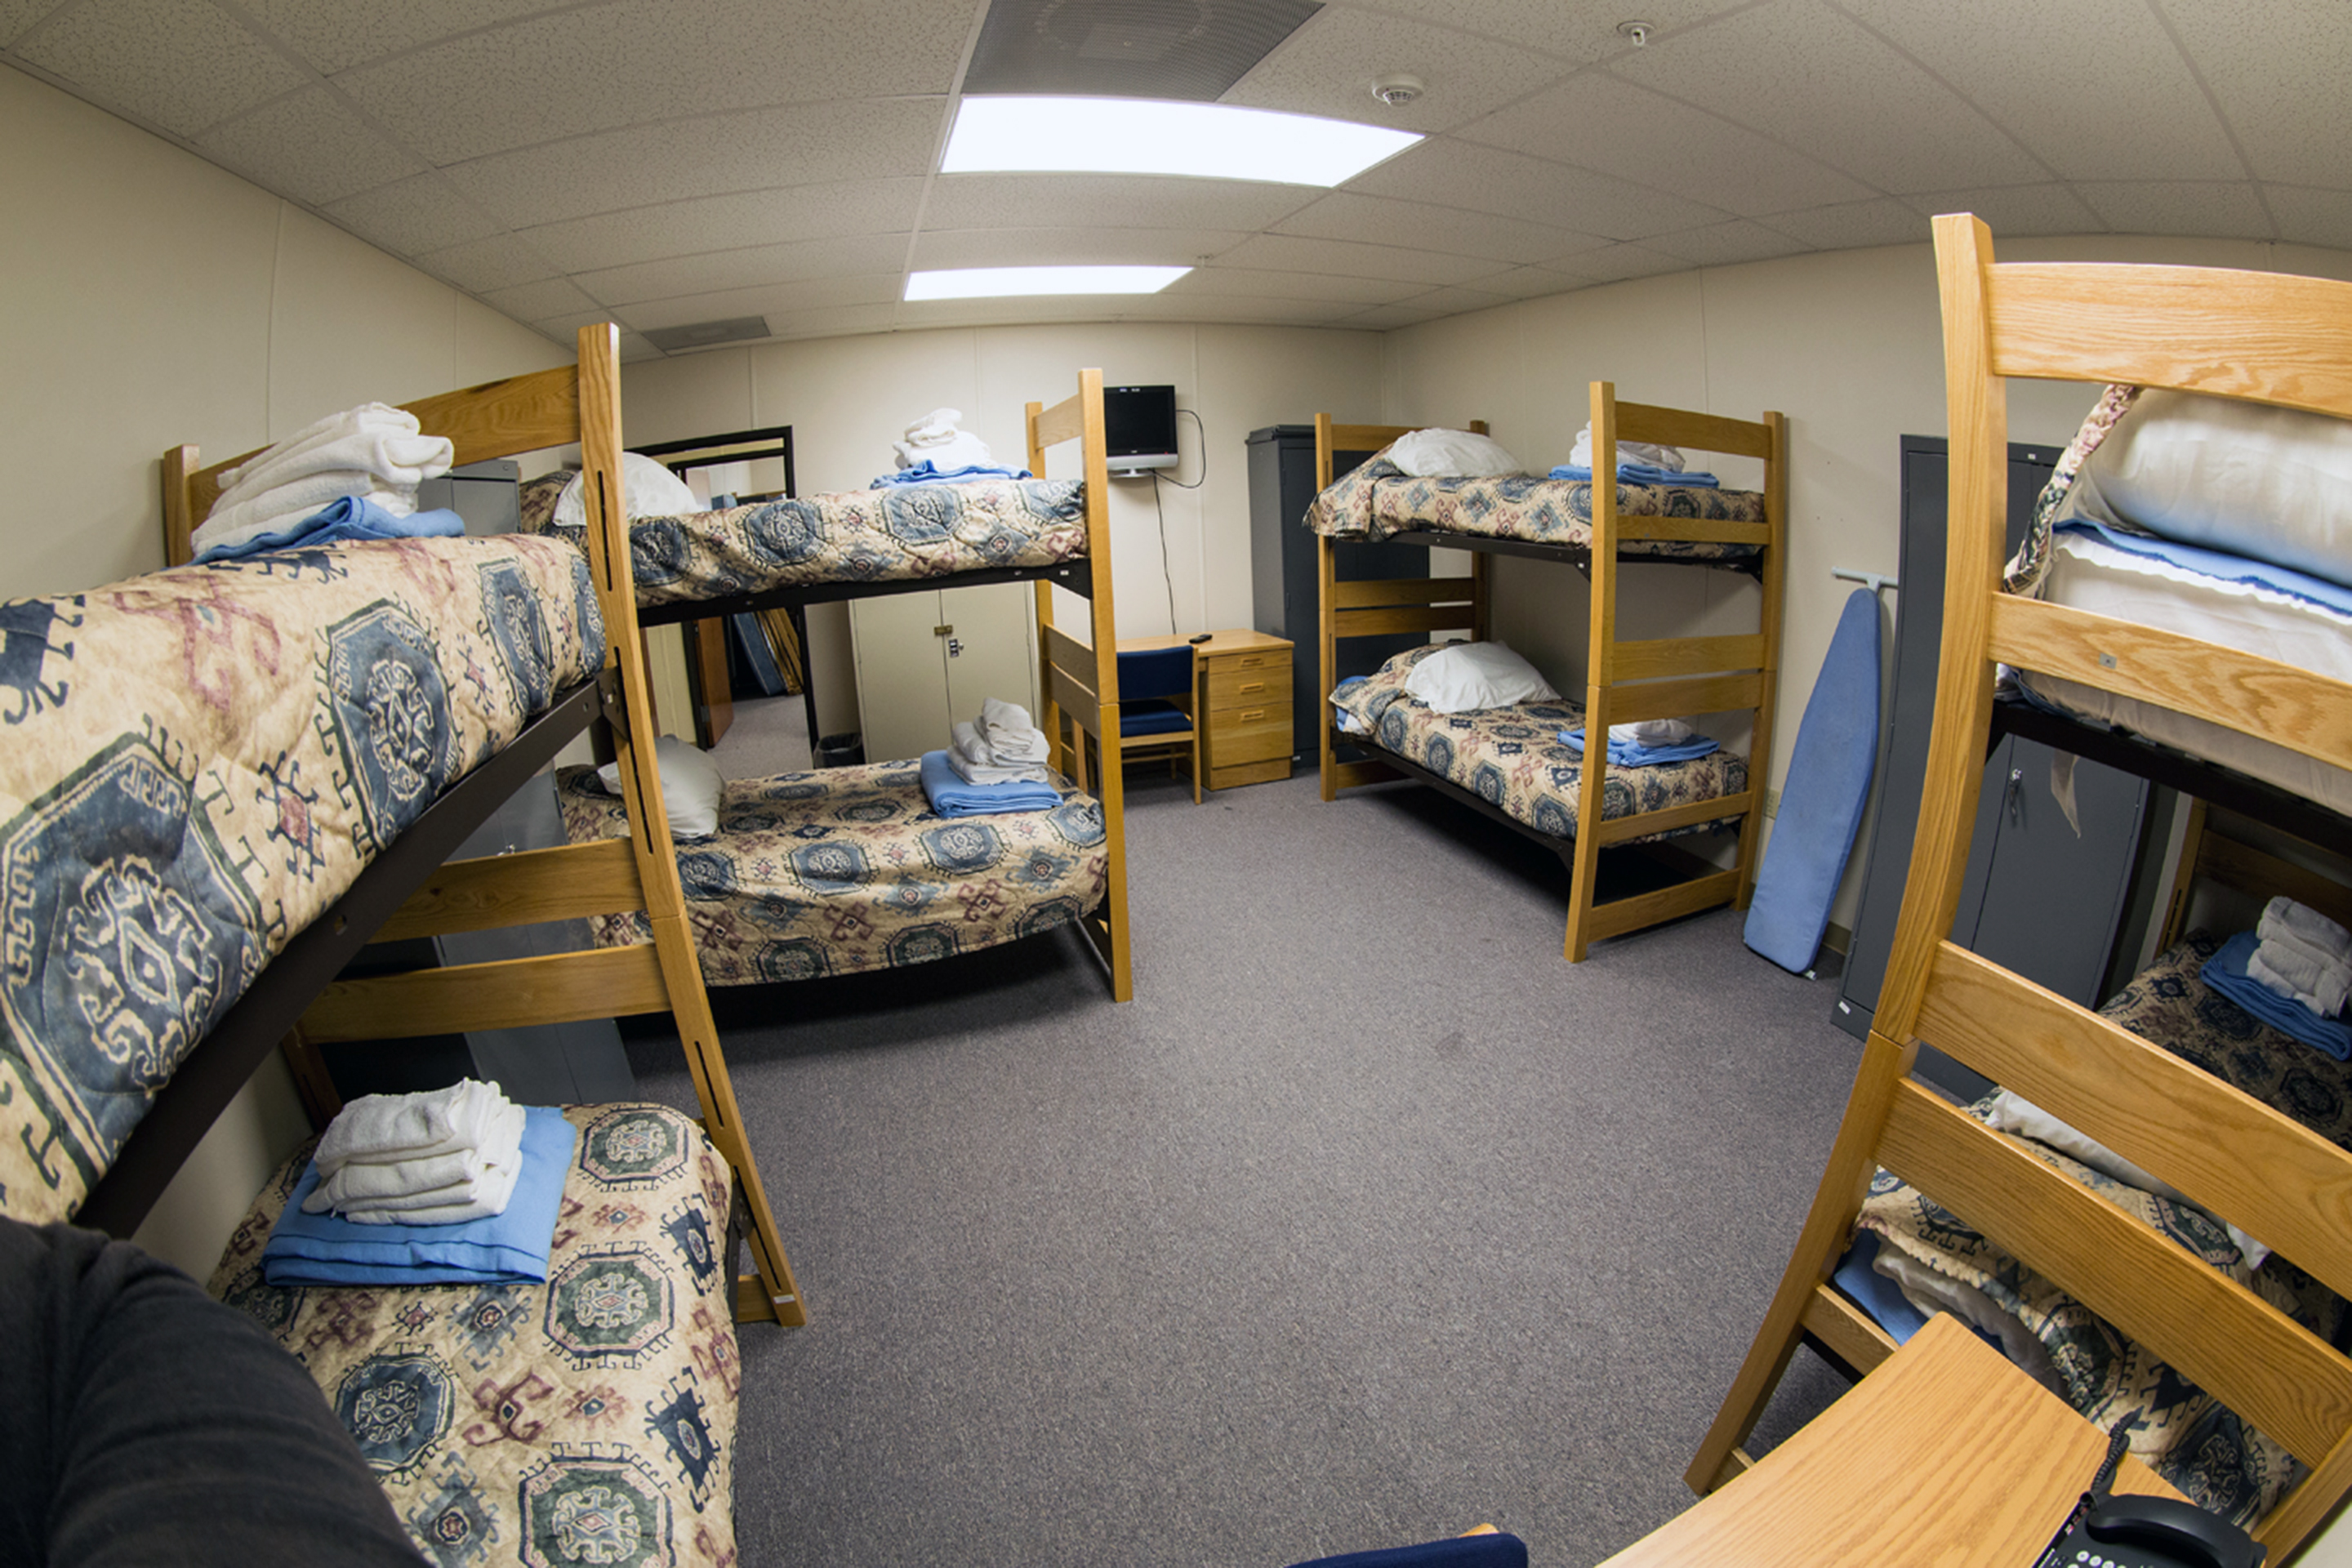 Dormrooms at Artesia, New Mexico